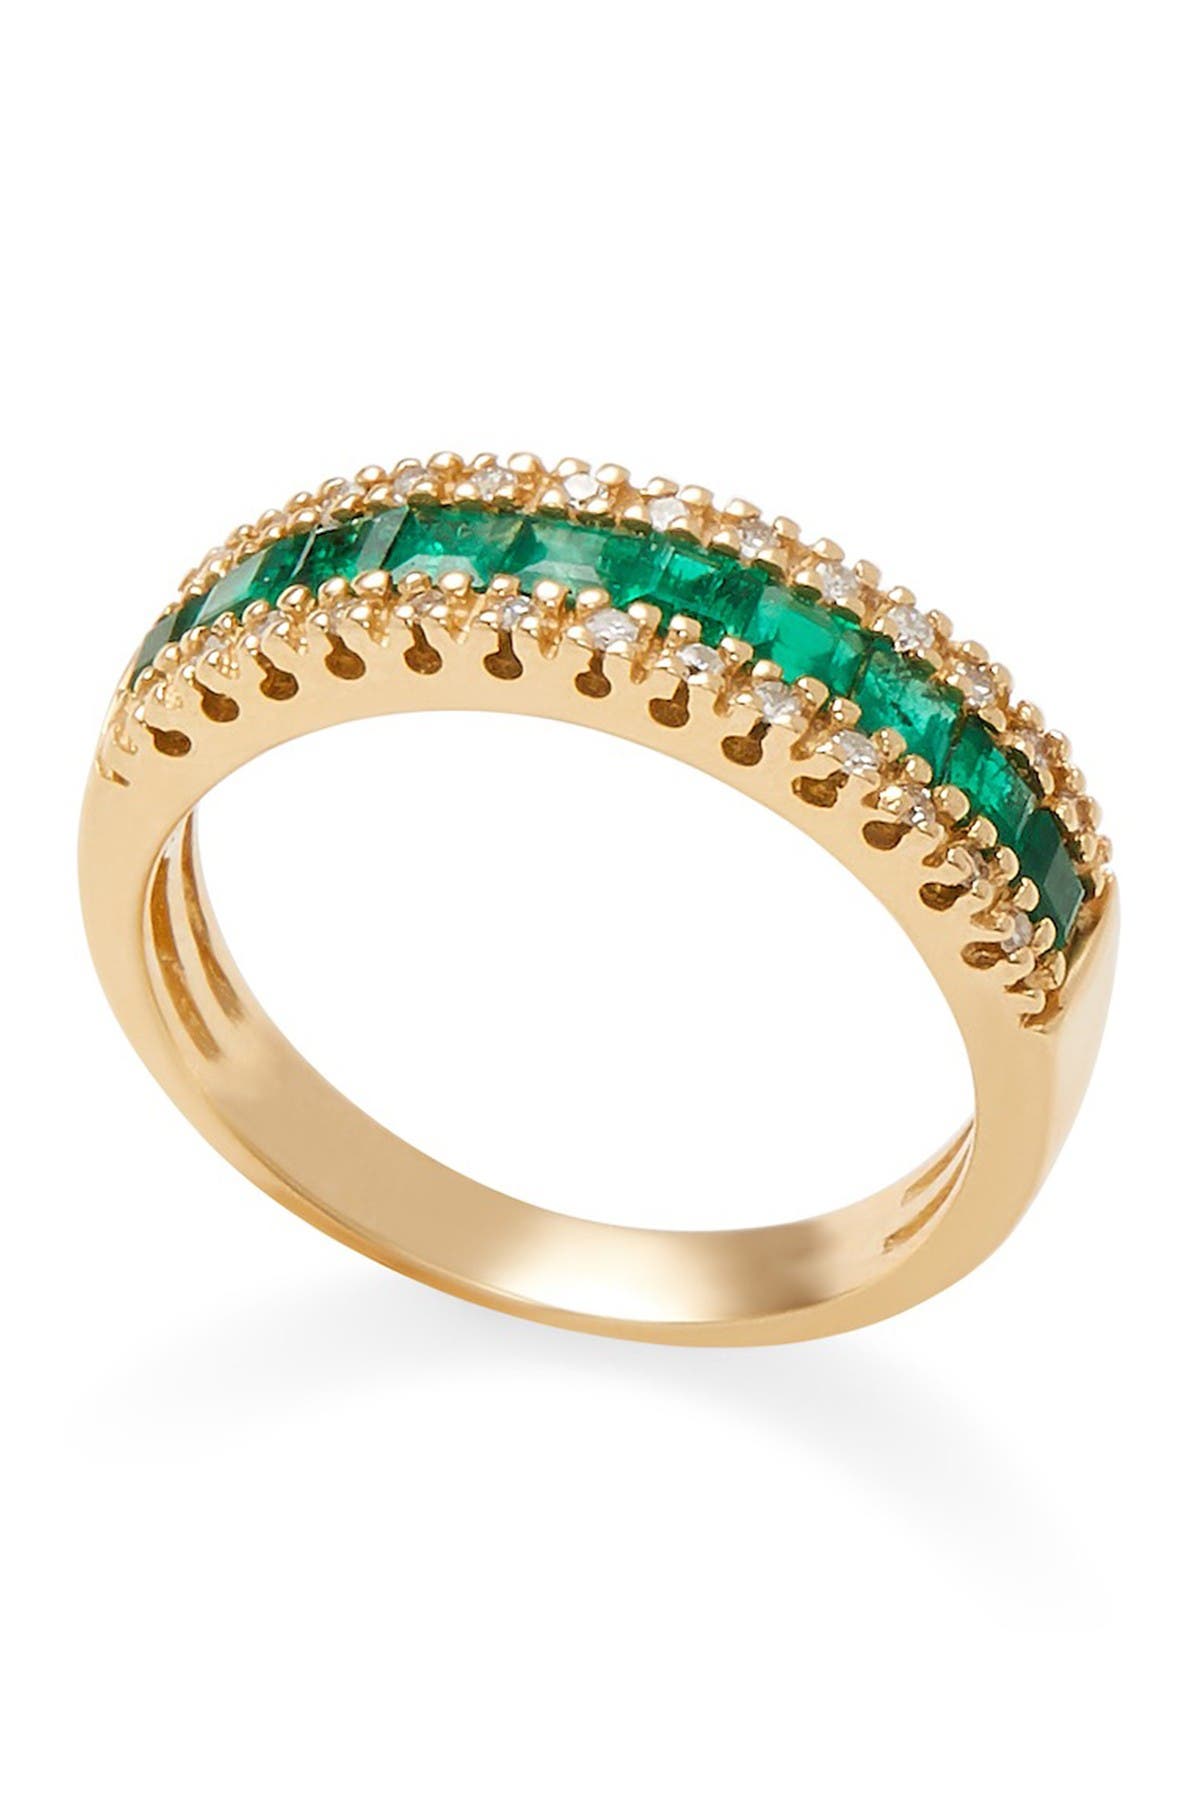 Effy | 14K Yellow Gold Diamond & Emerald Ring - 0.13 ctw - Size 7 ...